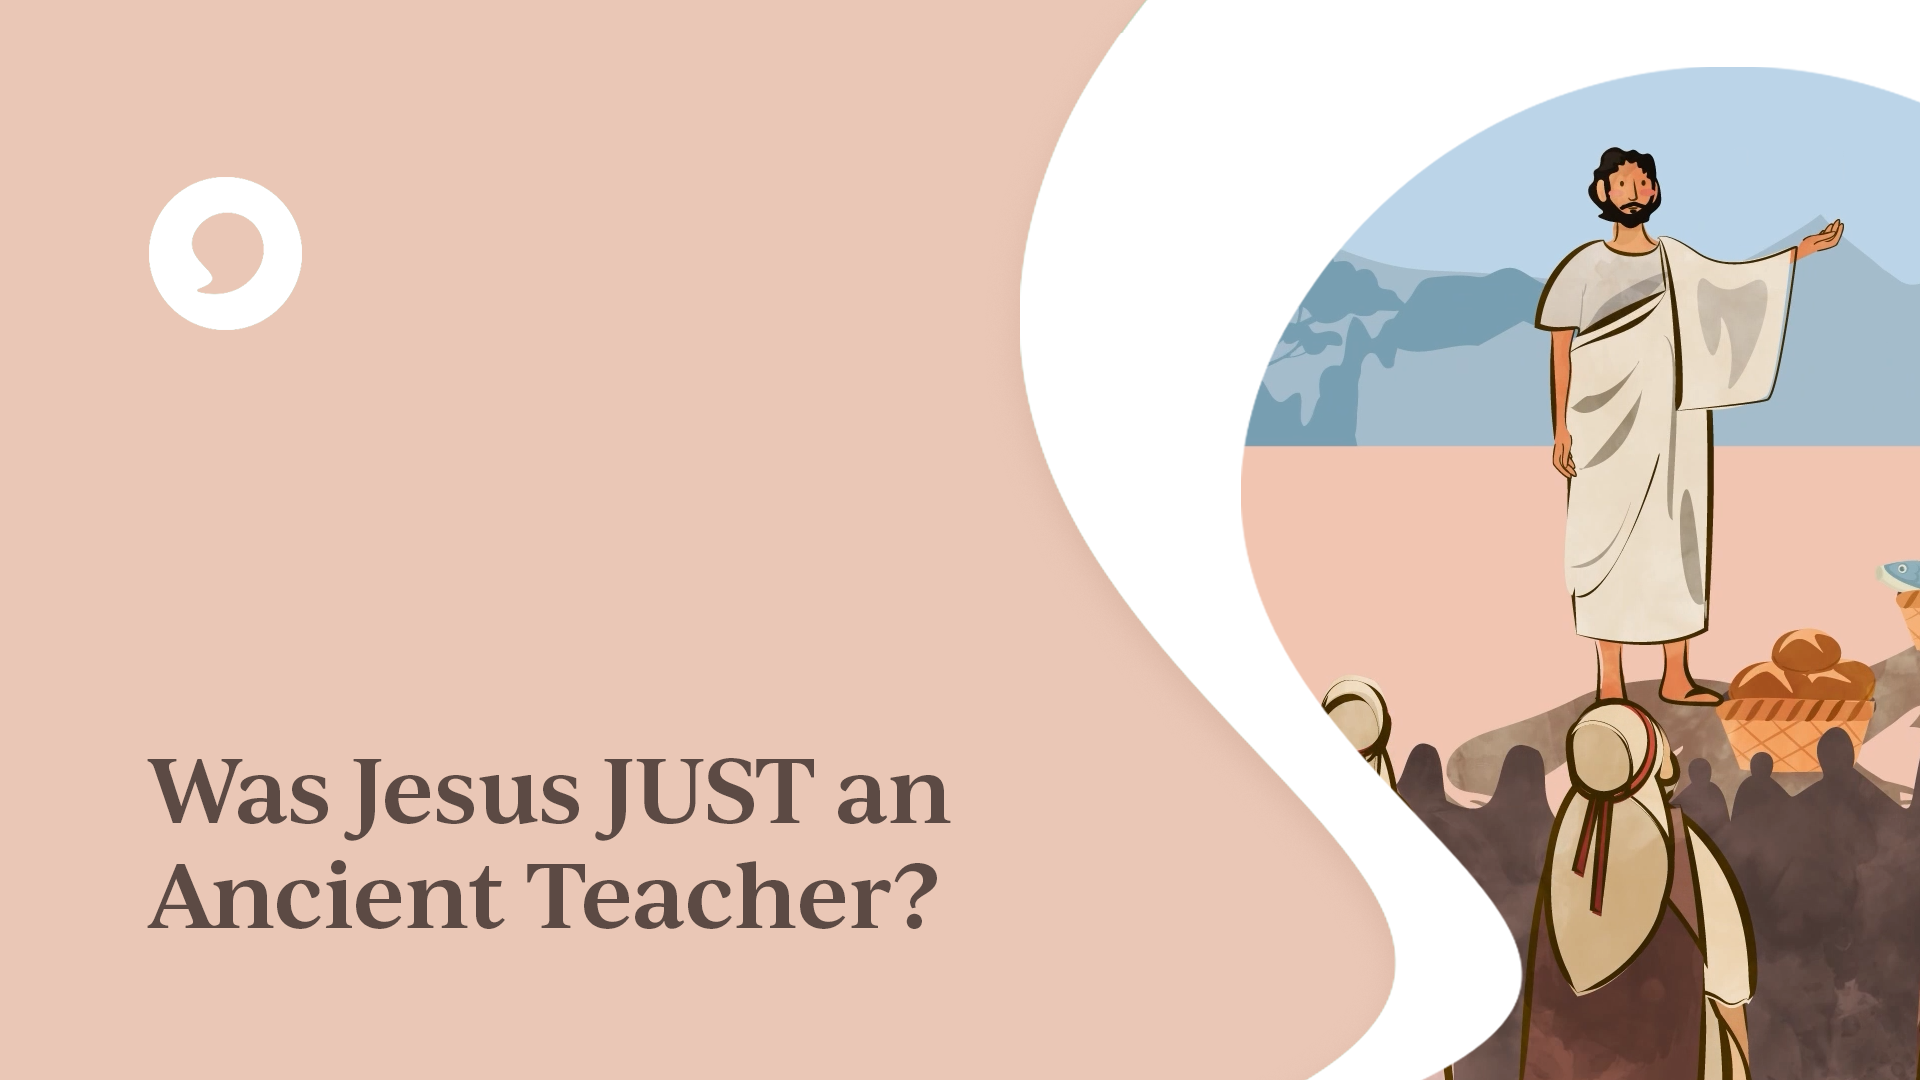 Was Jesus JUST an Ancient Teacher?